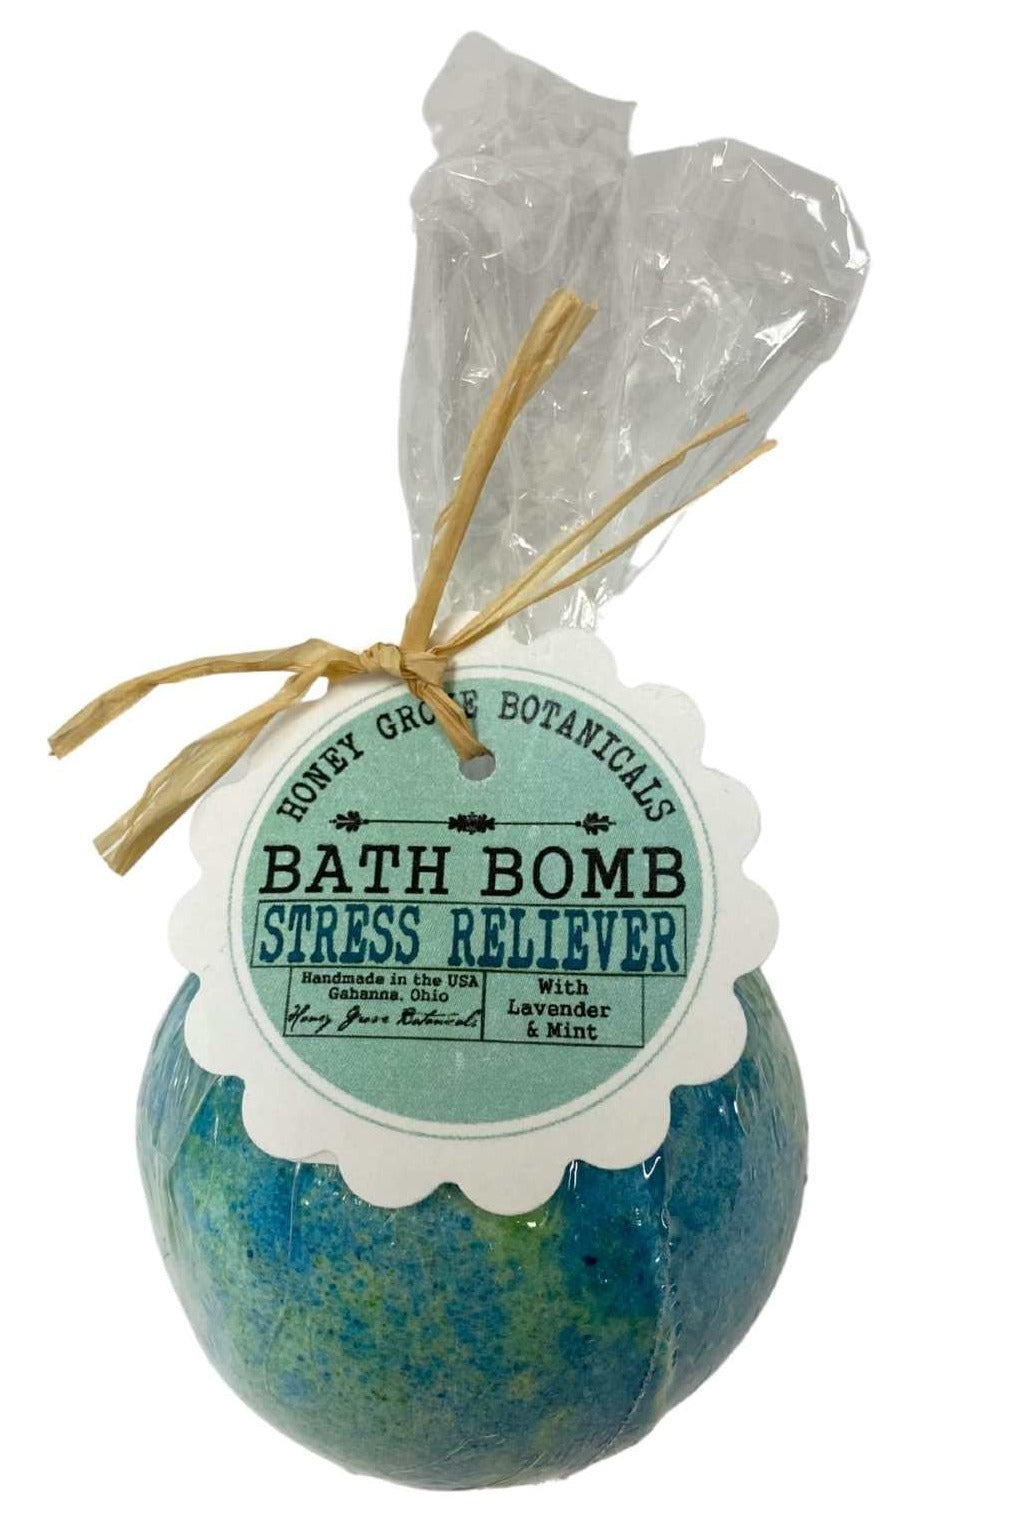 Stress Reliever Bath Bomb